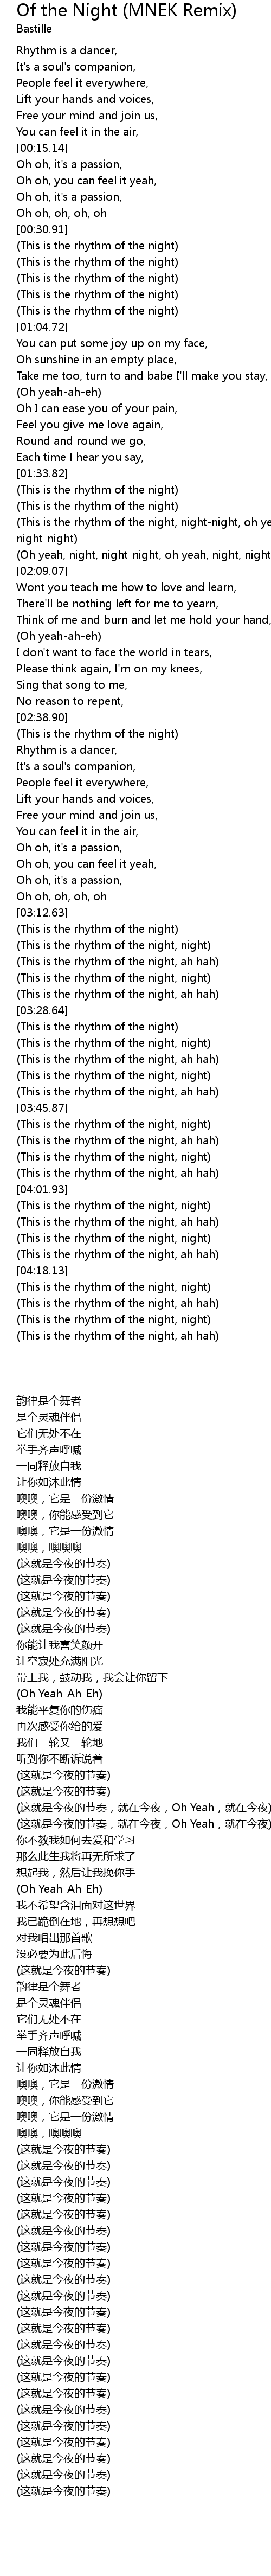 Of The Night Mnek Remix Lyrics Follow Lyrics Well, it's my fisrt tab, so be good with me :) this is a dance song. follow lyrics